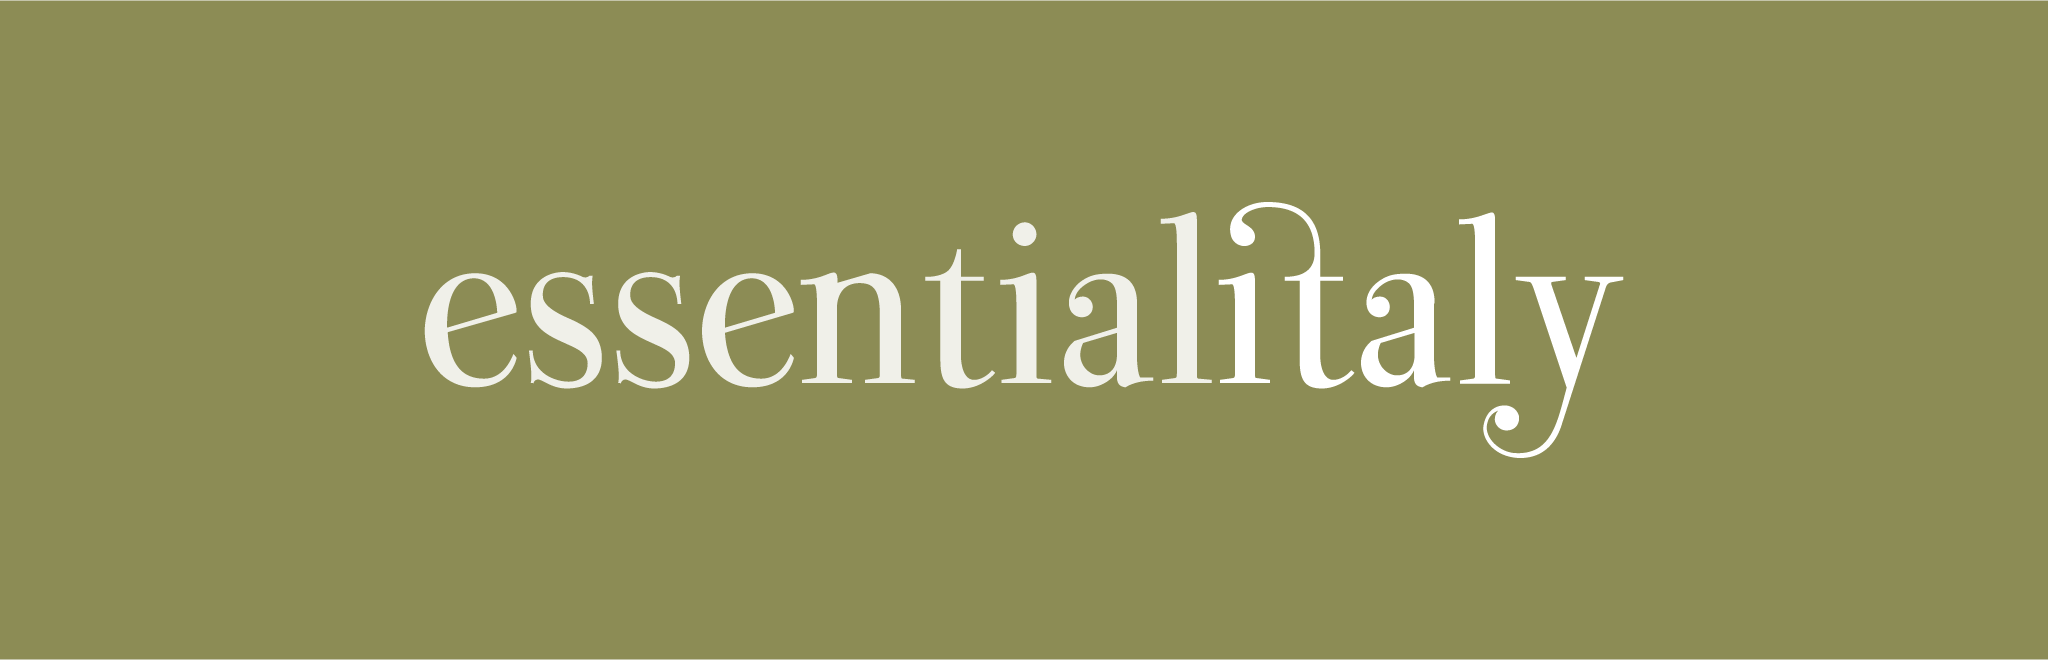 essentiality